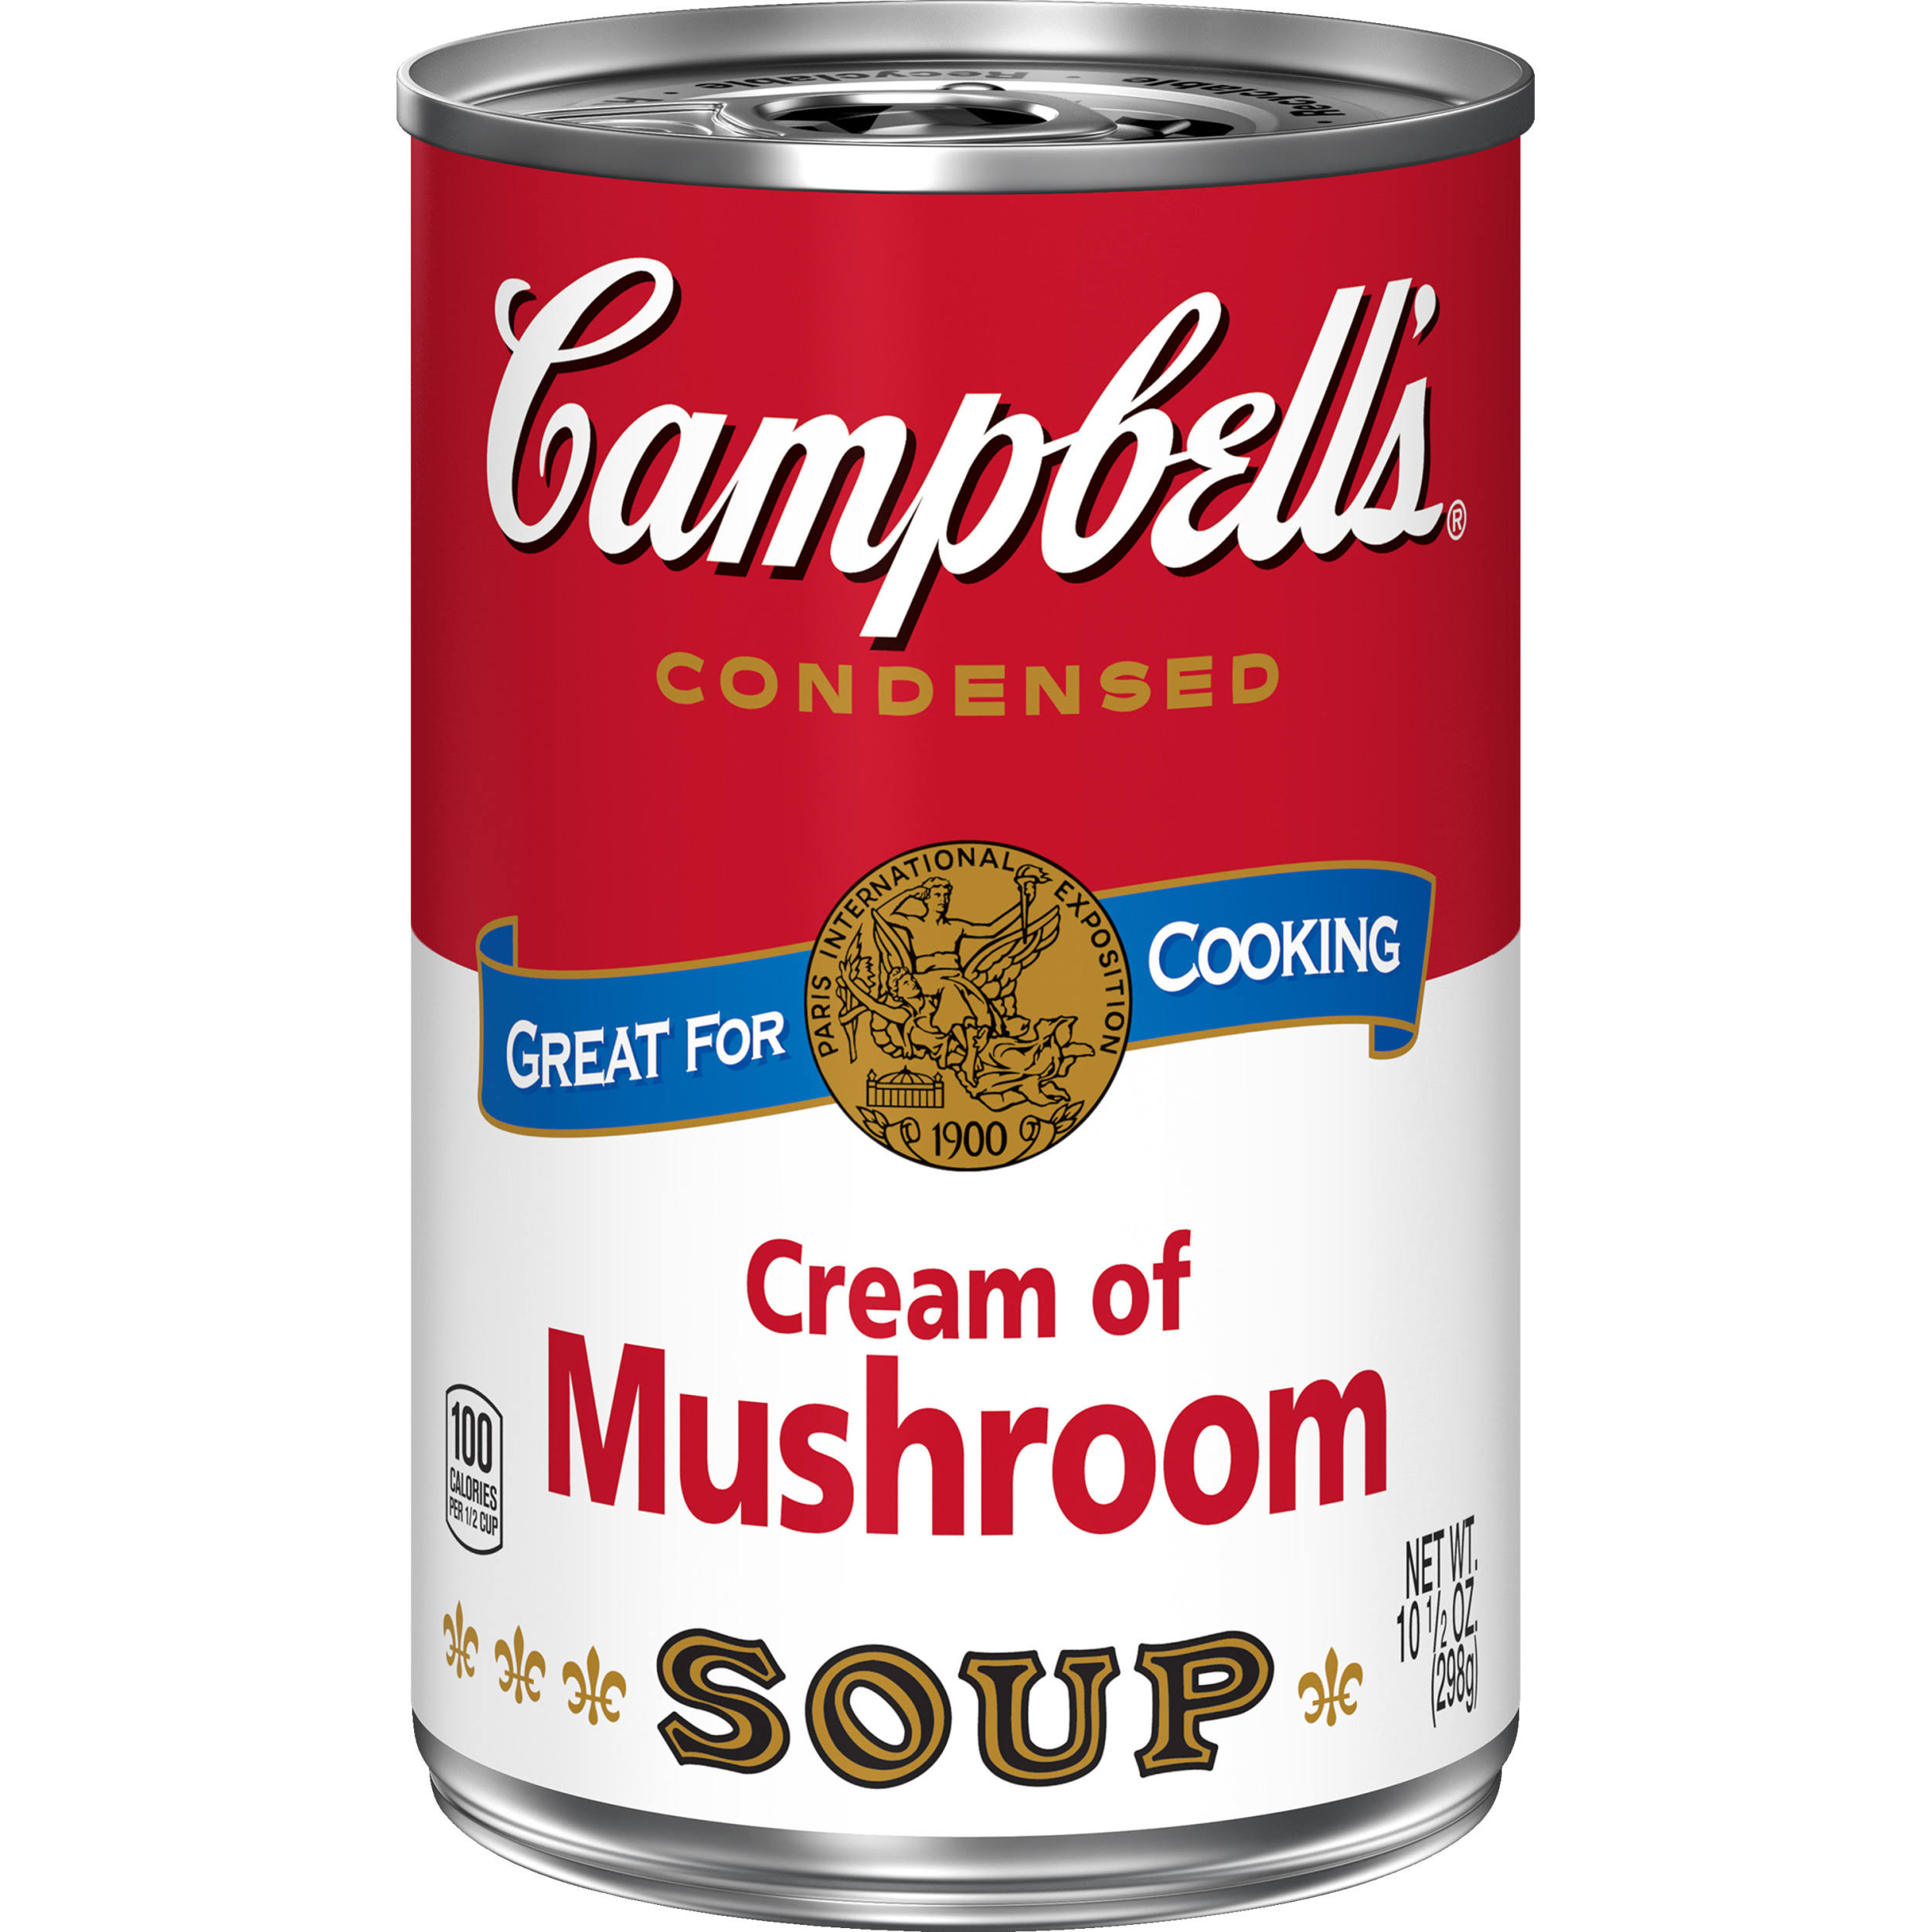 Campbell's Cream of Mushroom Condensed Soup - 10.75oz